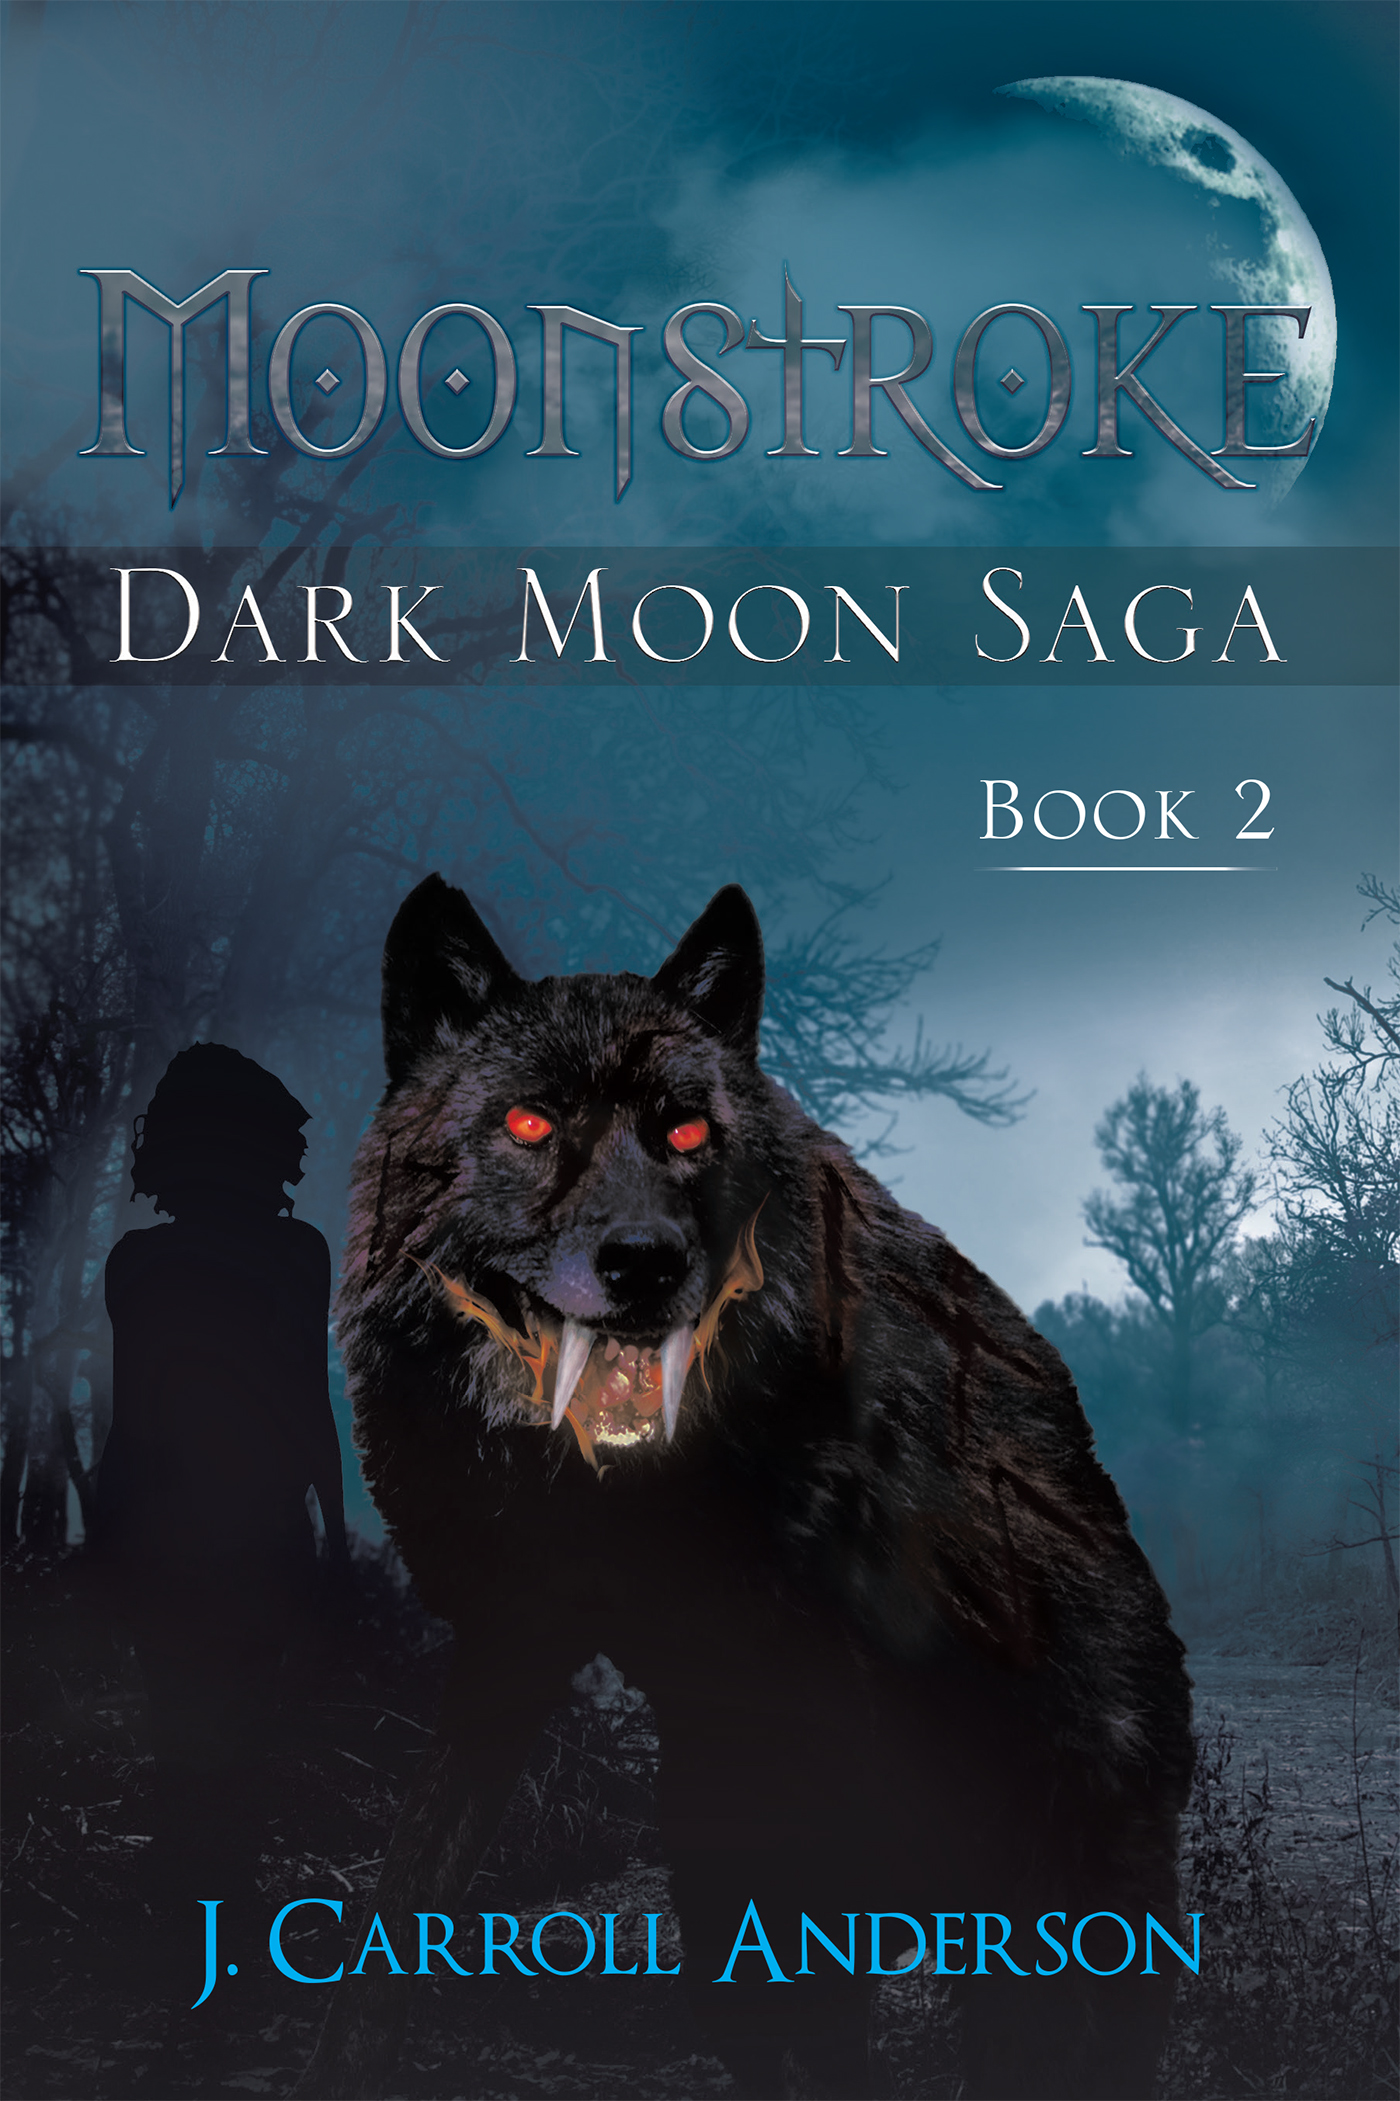 Dark Moon Saga - Moonstroke Cover Image